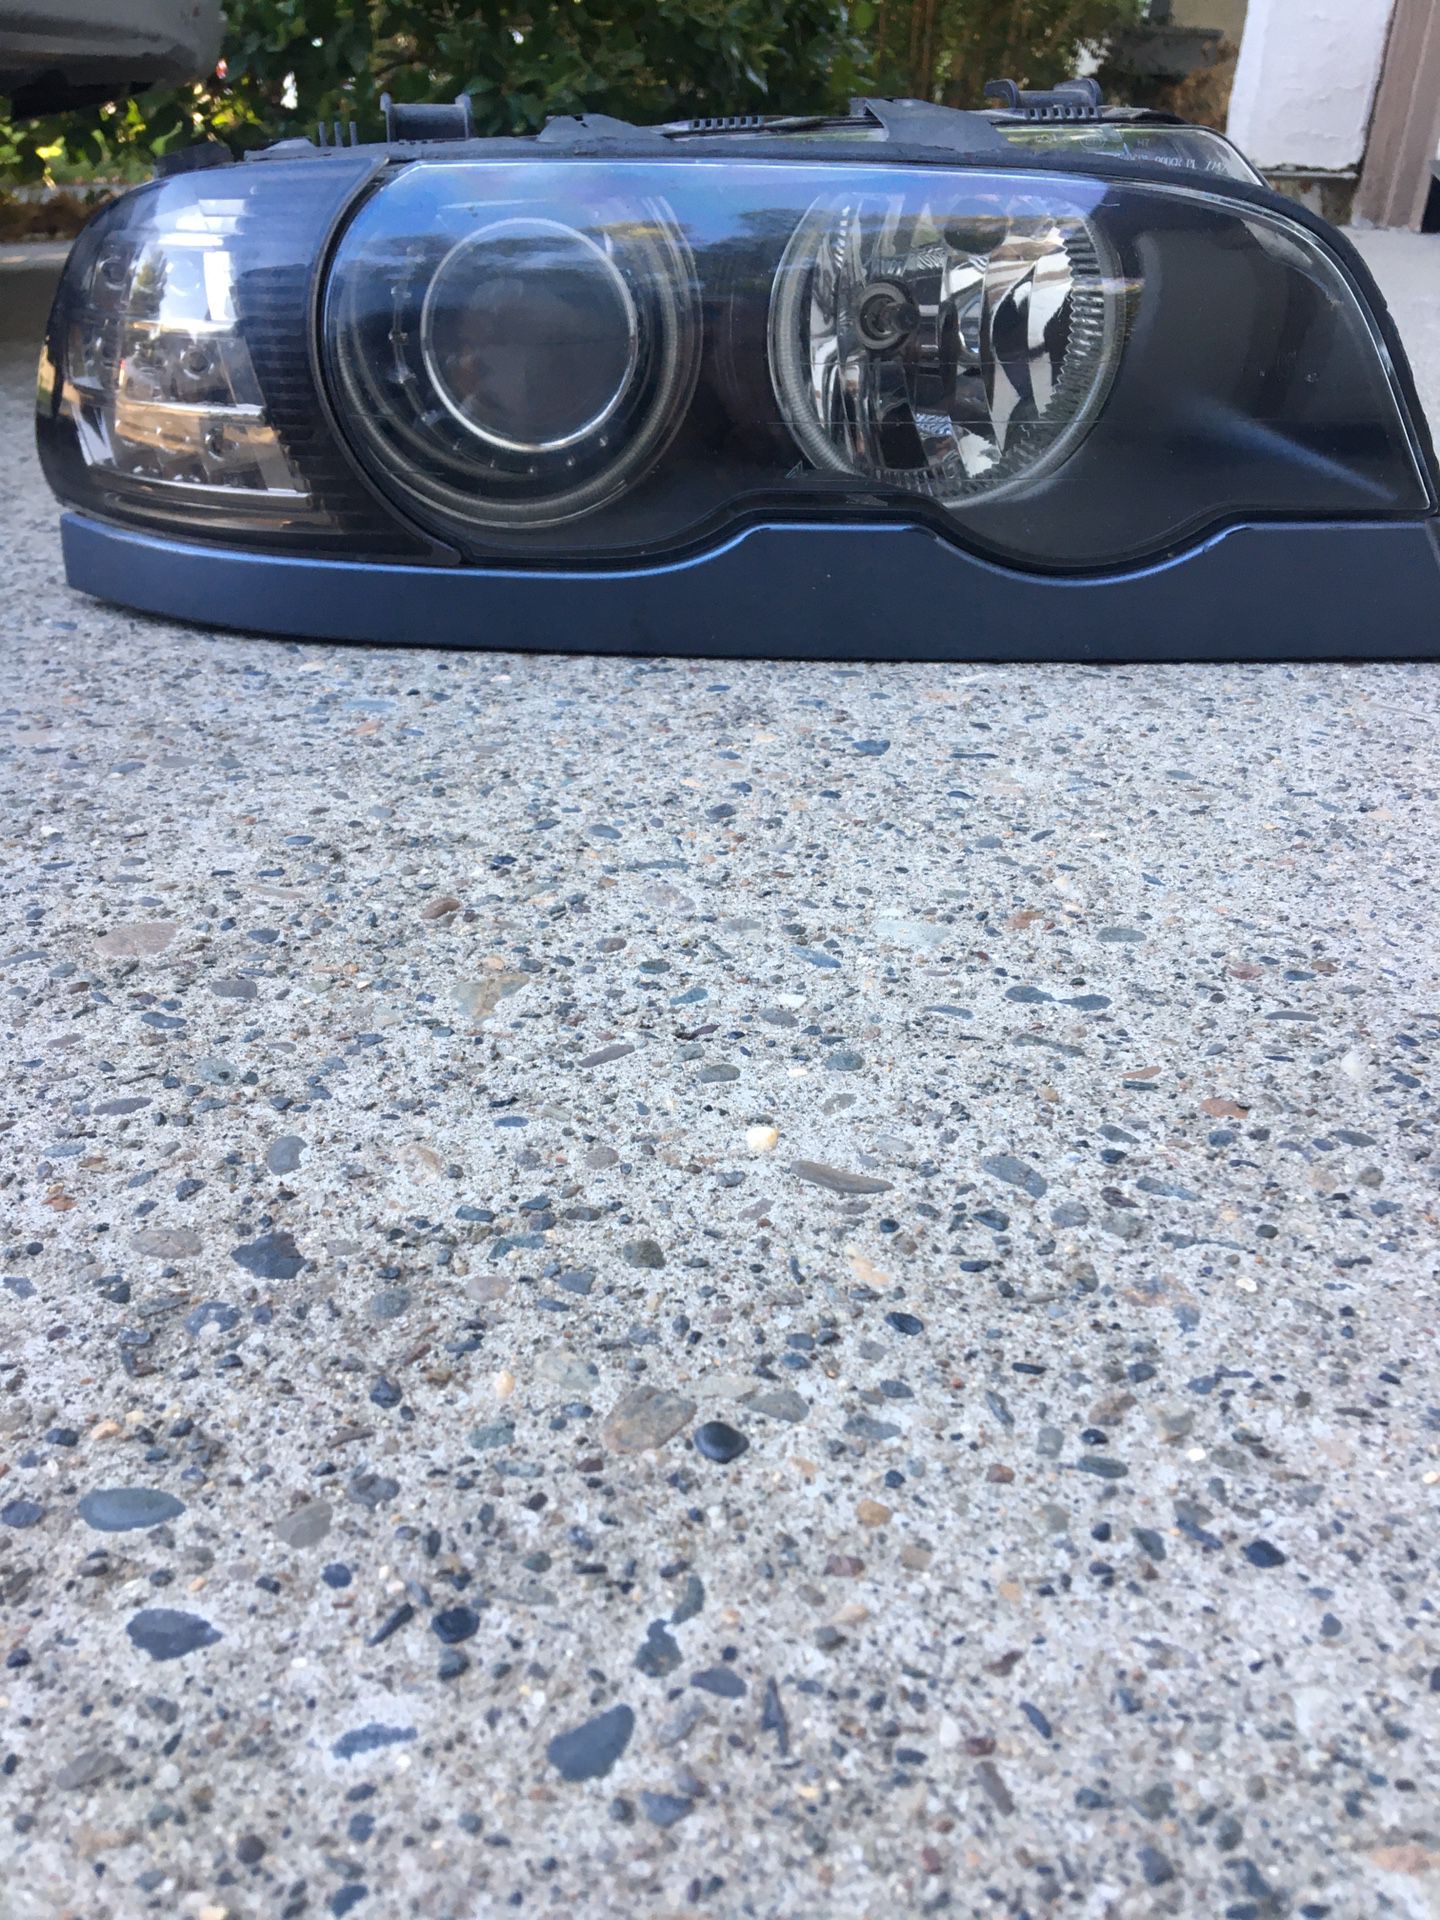 BMW r/f headlight